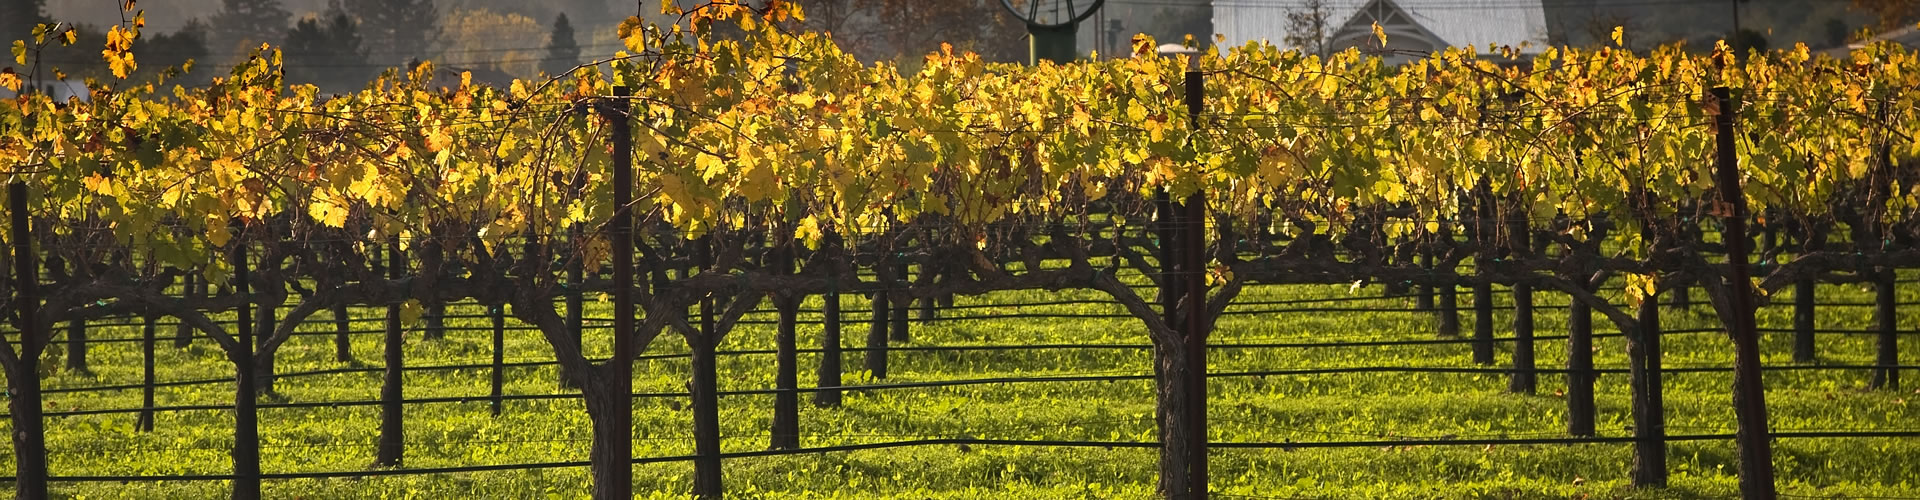 California winery scene